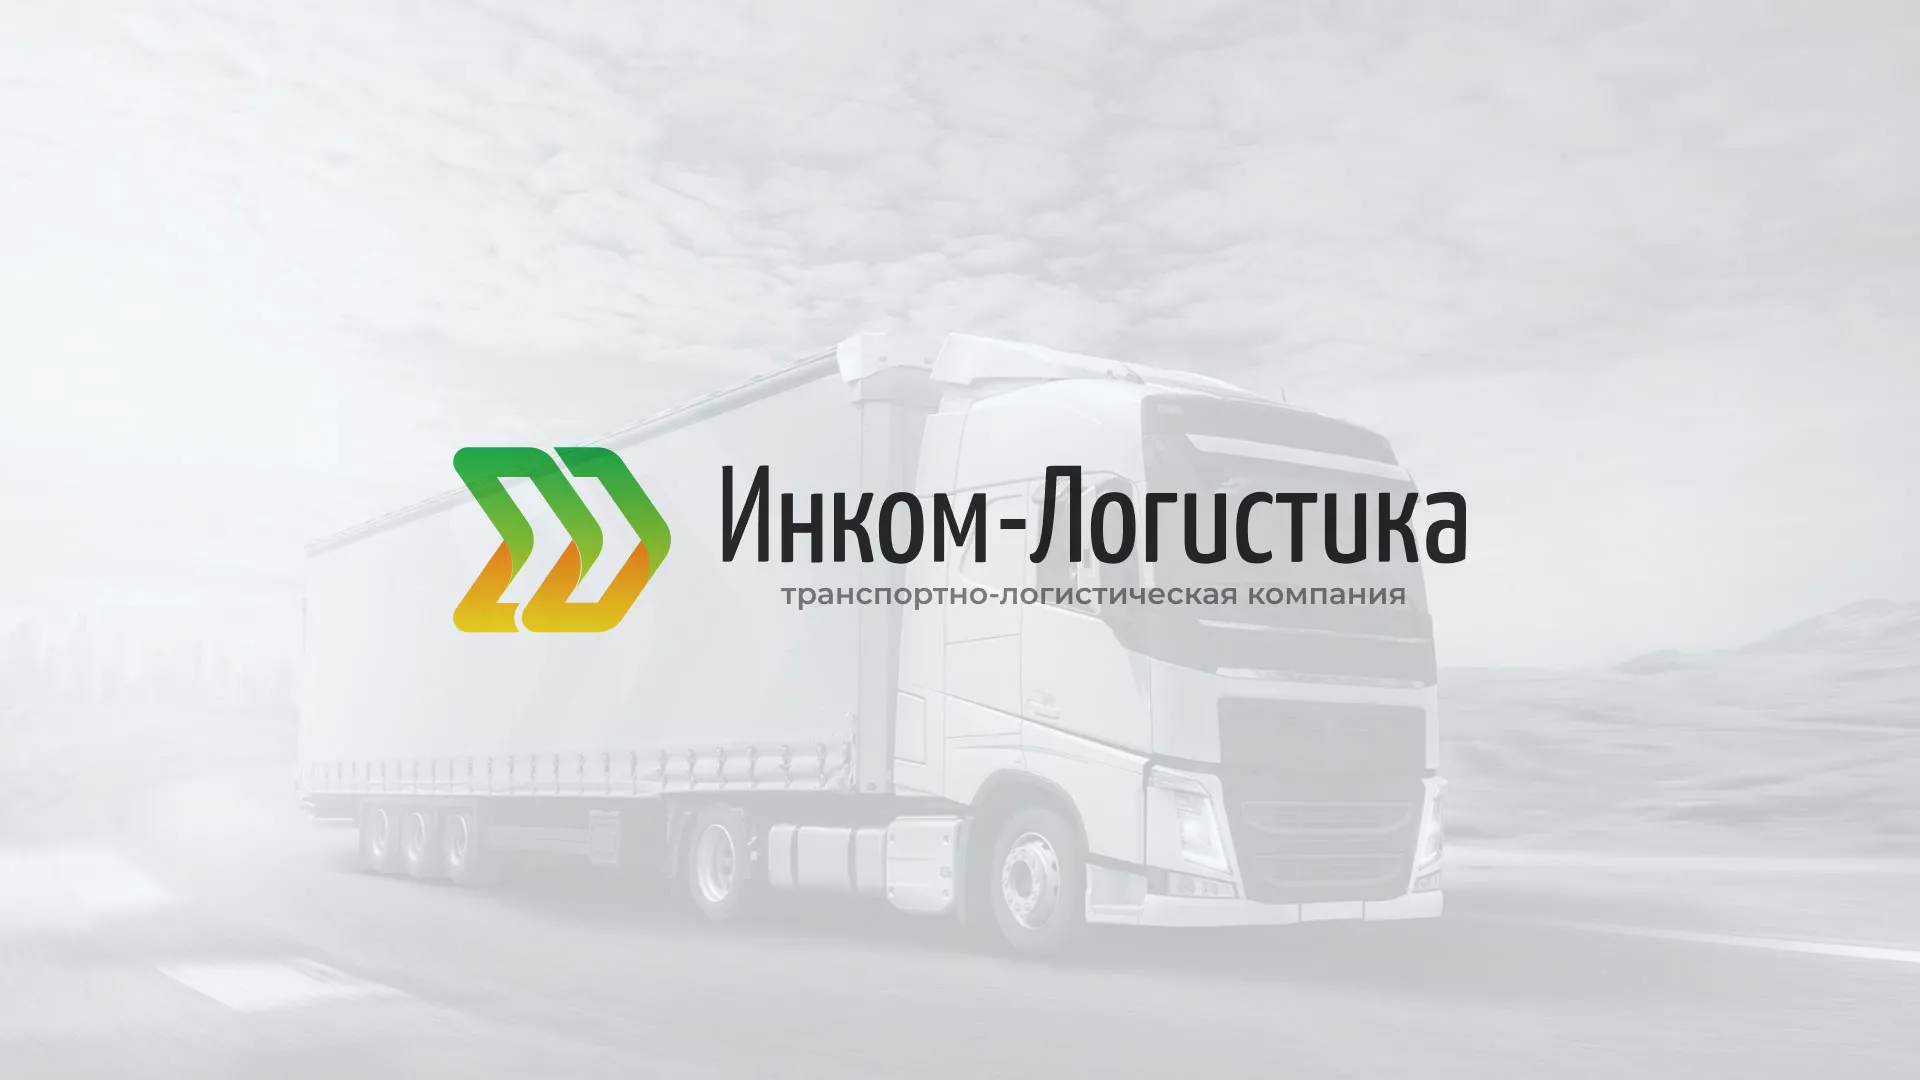 Разработка логотипа и сайта компании «Инком-Логистика» в Зеленограде